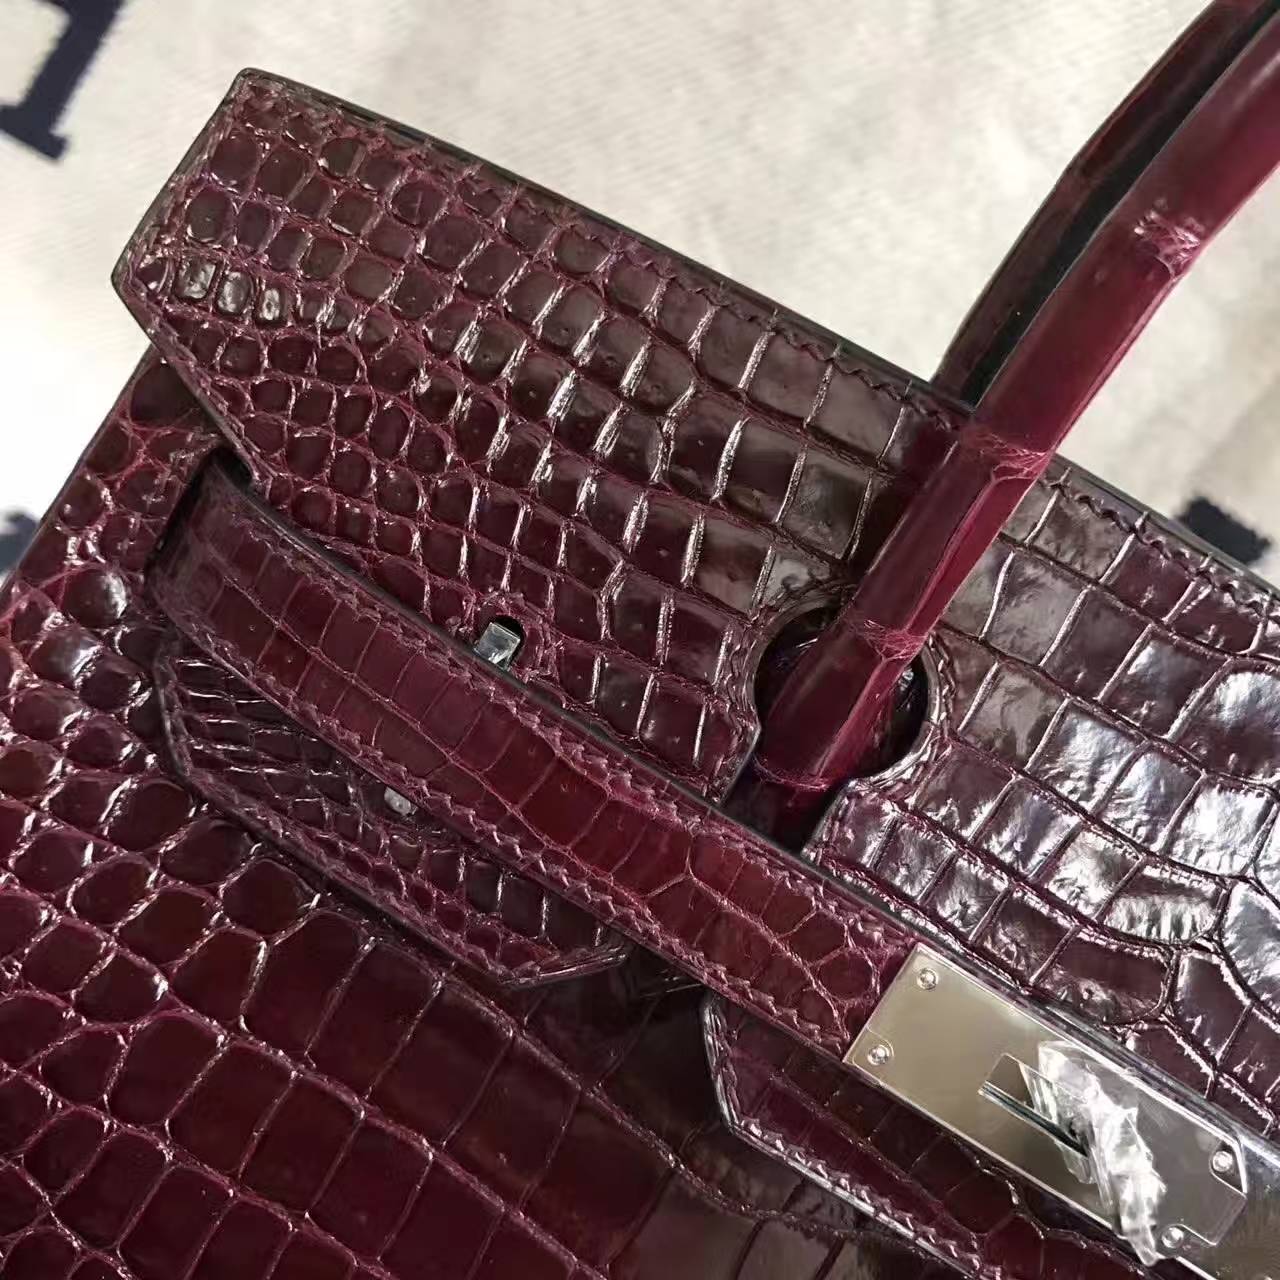 On Sale Hermes CK57 Bordeaux Crocodile Shiny Leather Birkin Bag 30cm